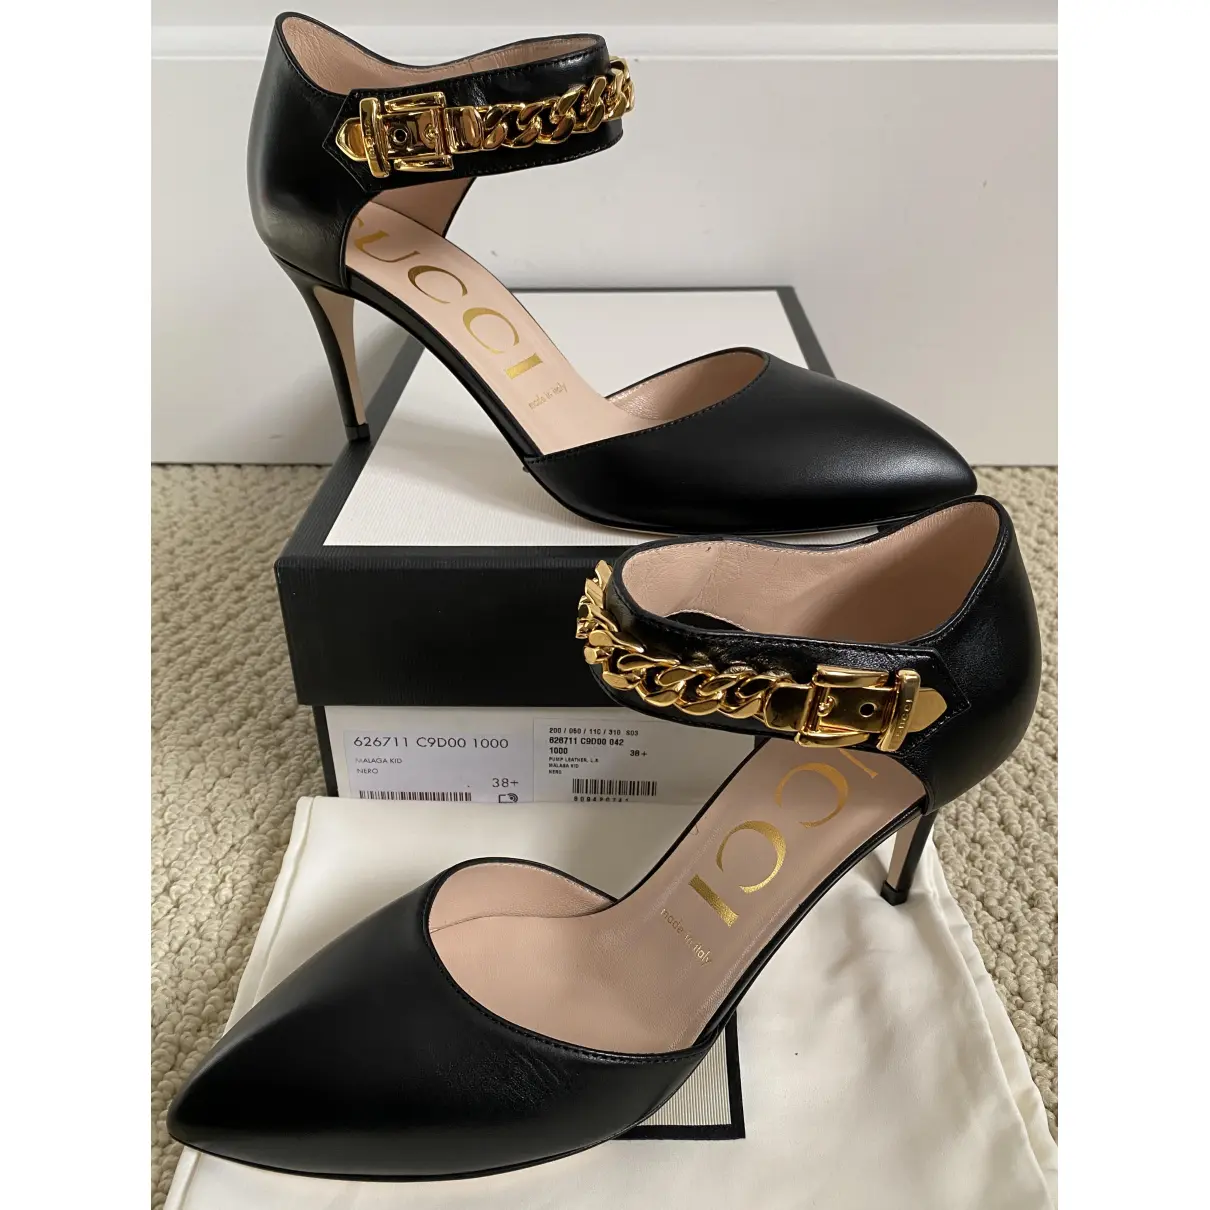 Buy Gucci Sylvie leather heels online